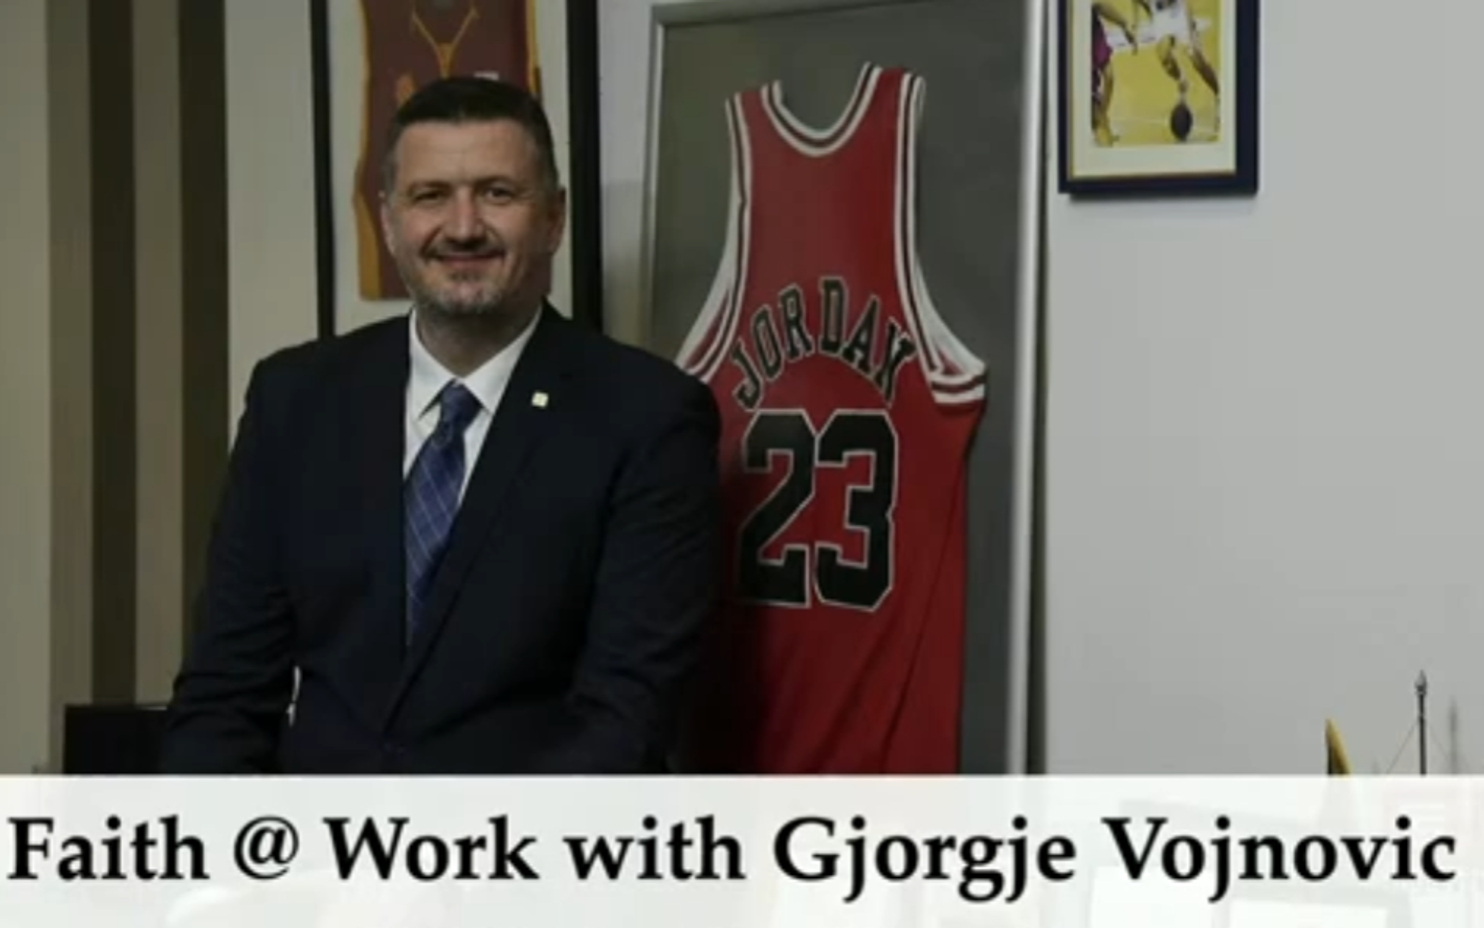 Faith @ Work interview with Gjorgje Vojnovic